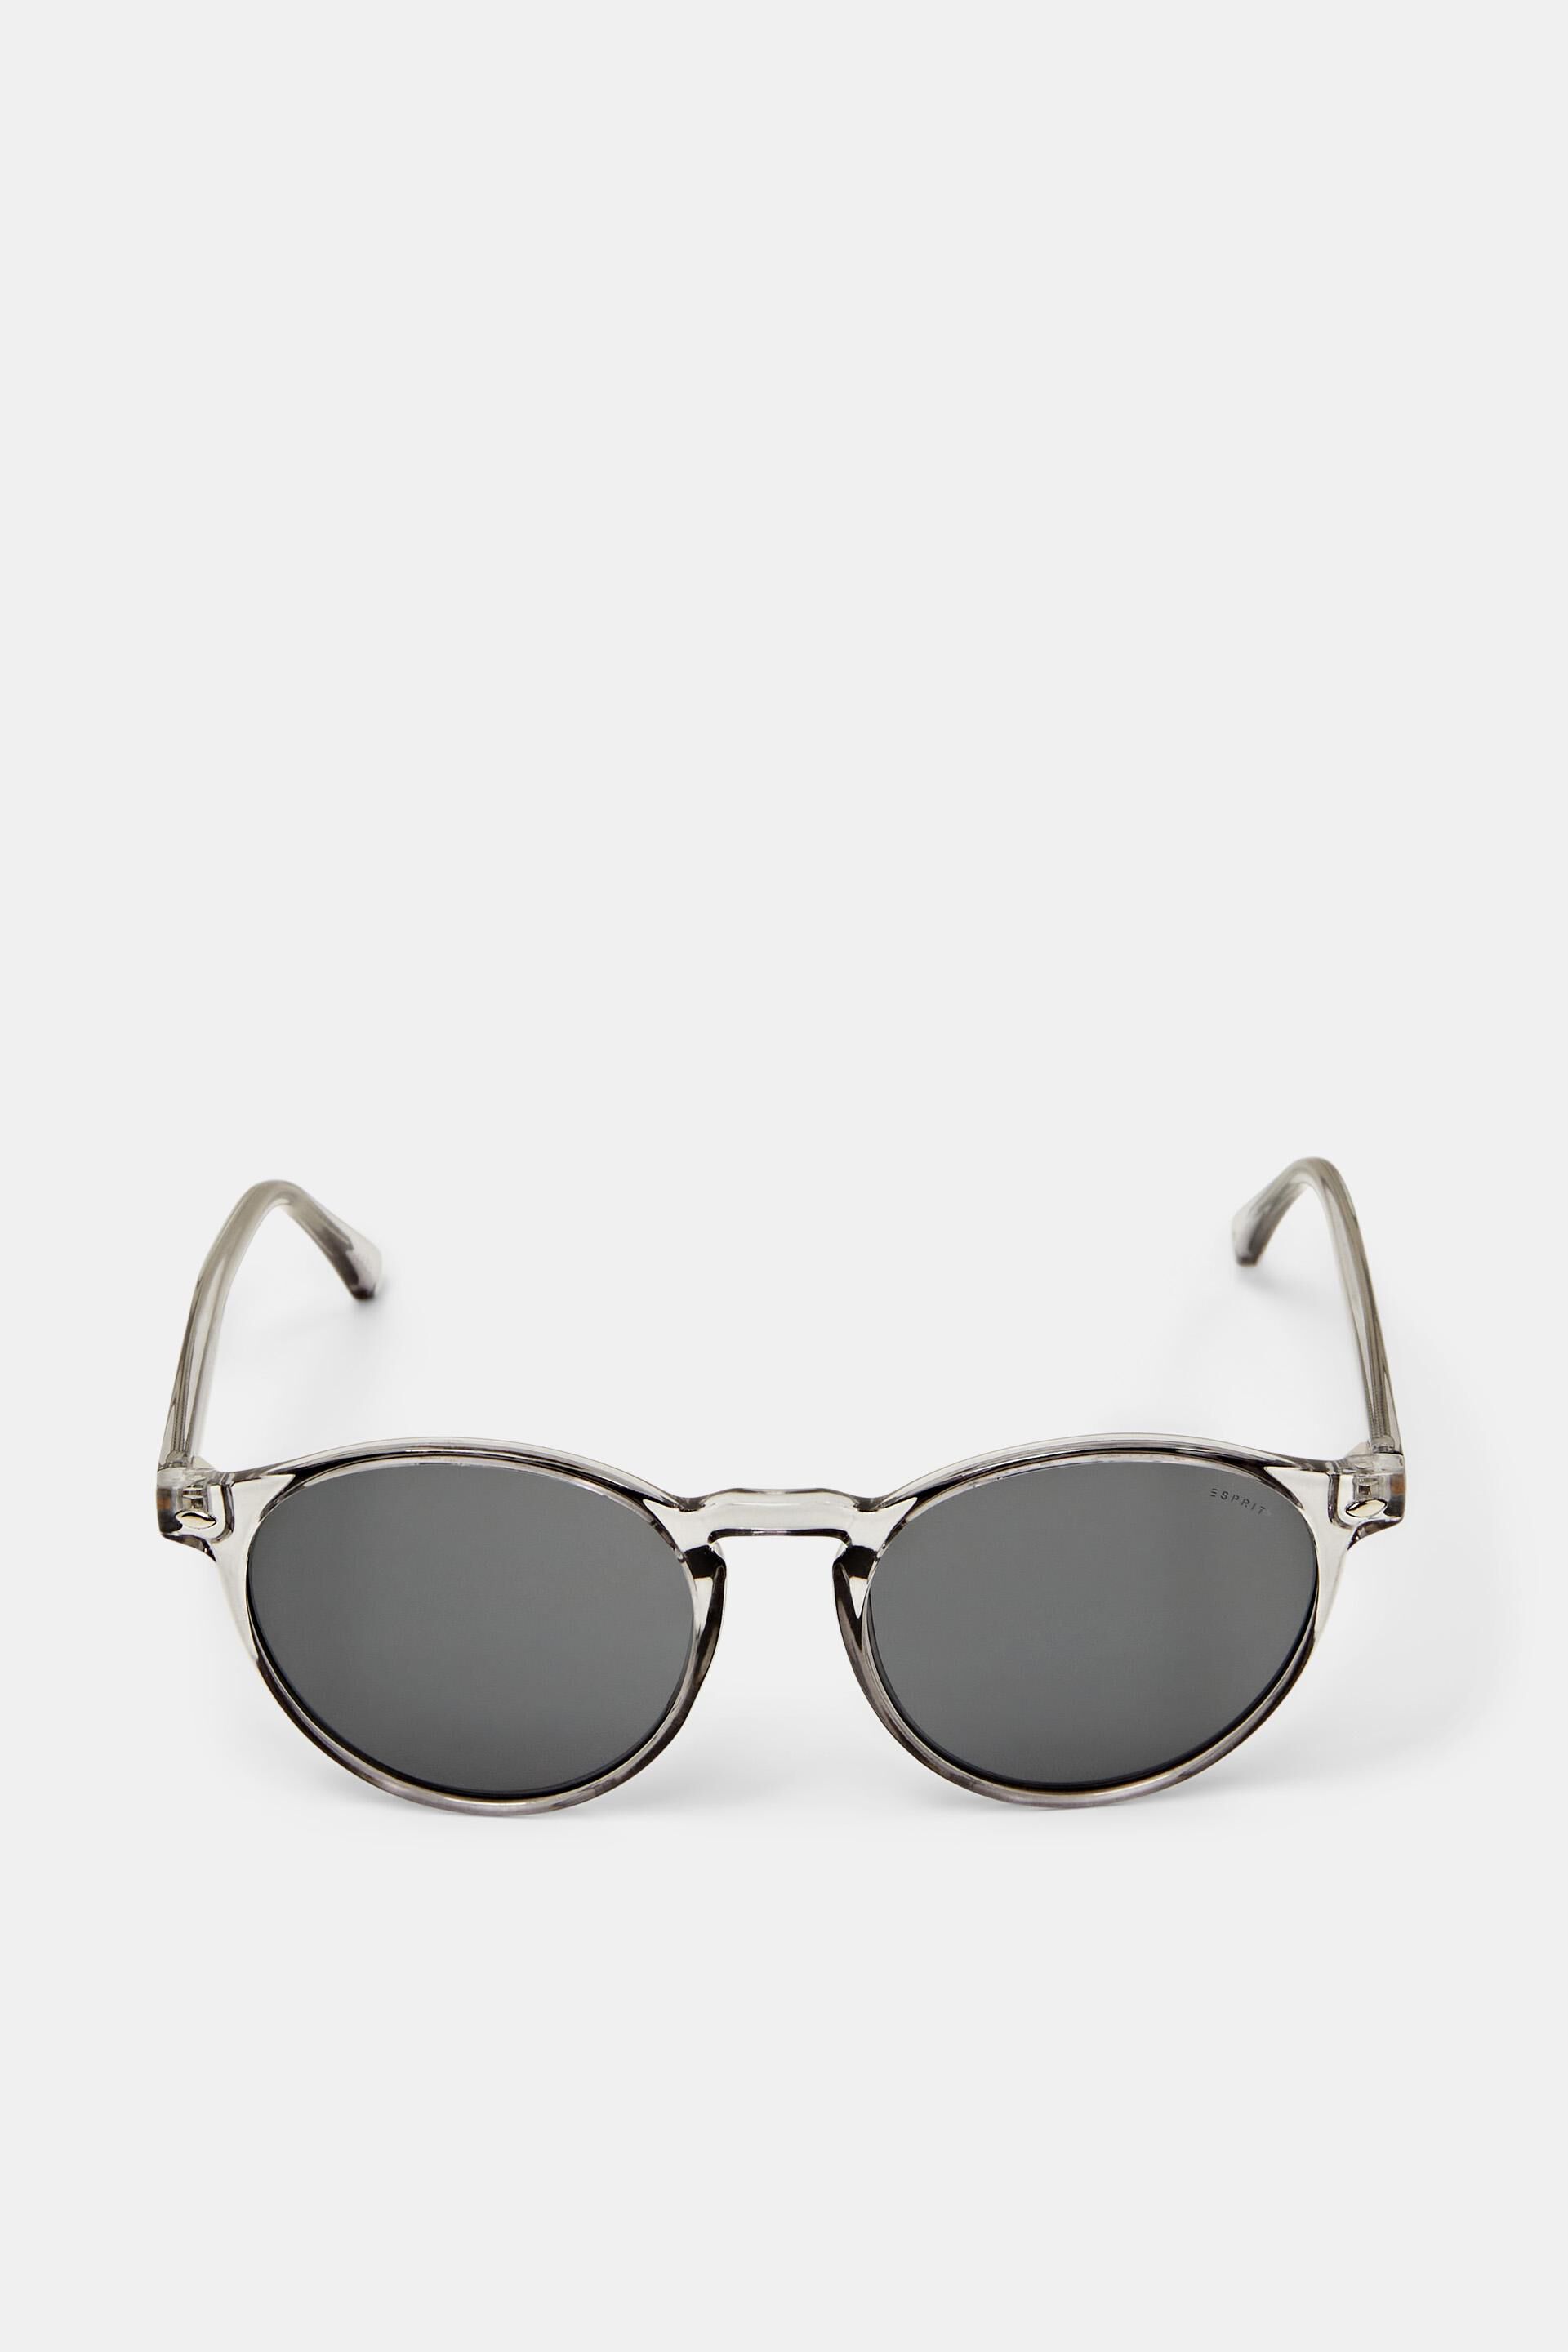 Esprit round transparent frame with Sunglasses